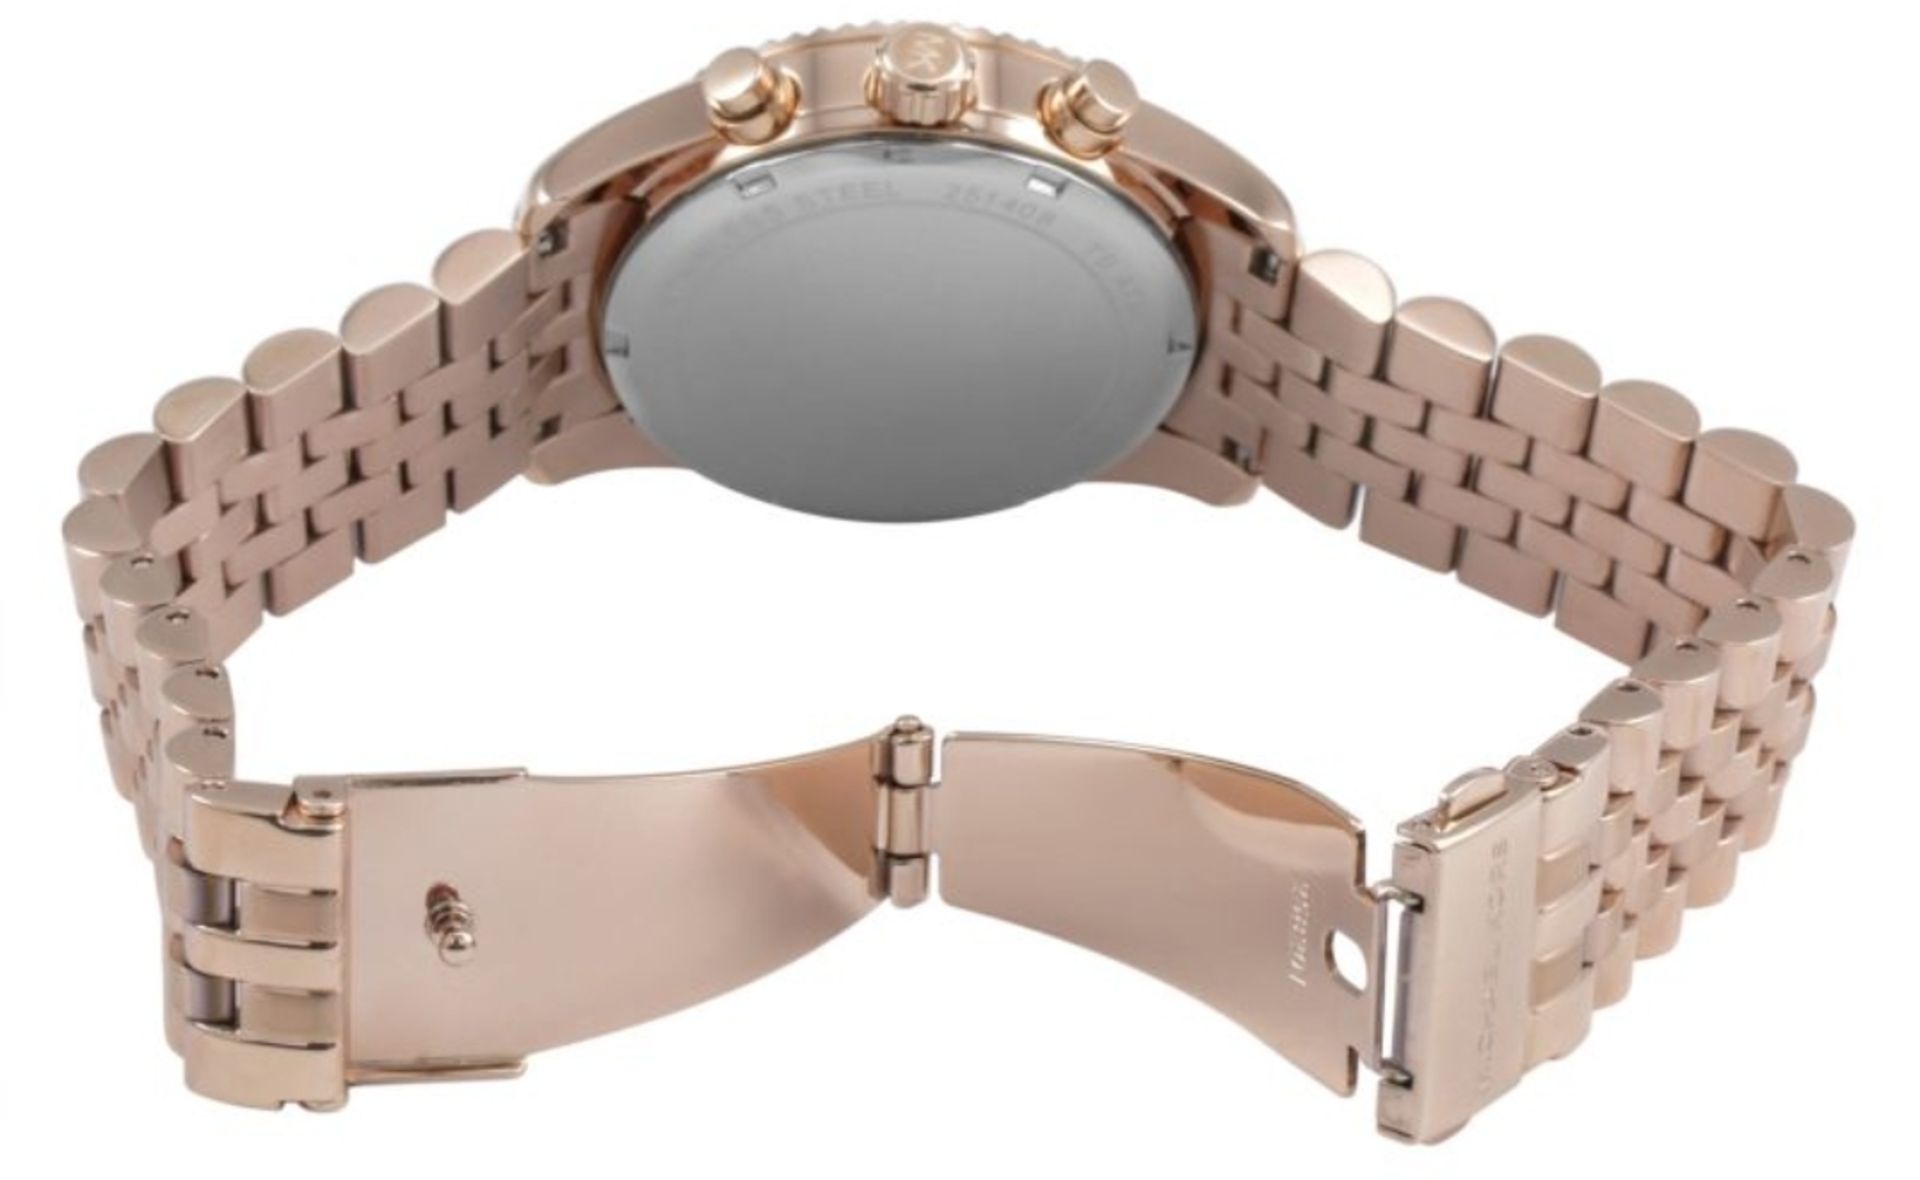 Michael Kors MK5569 Ladies Rose Gold Lexington Quartz Watch - Image 6 of 7